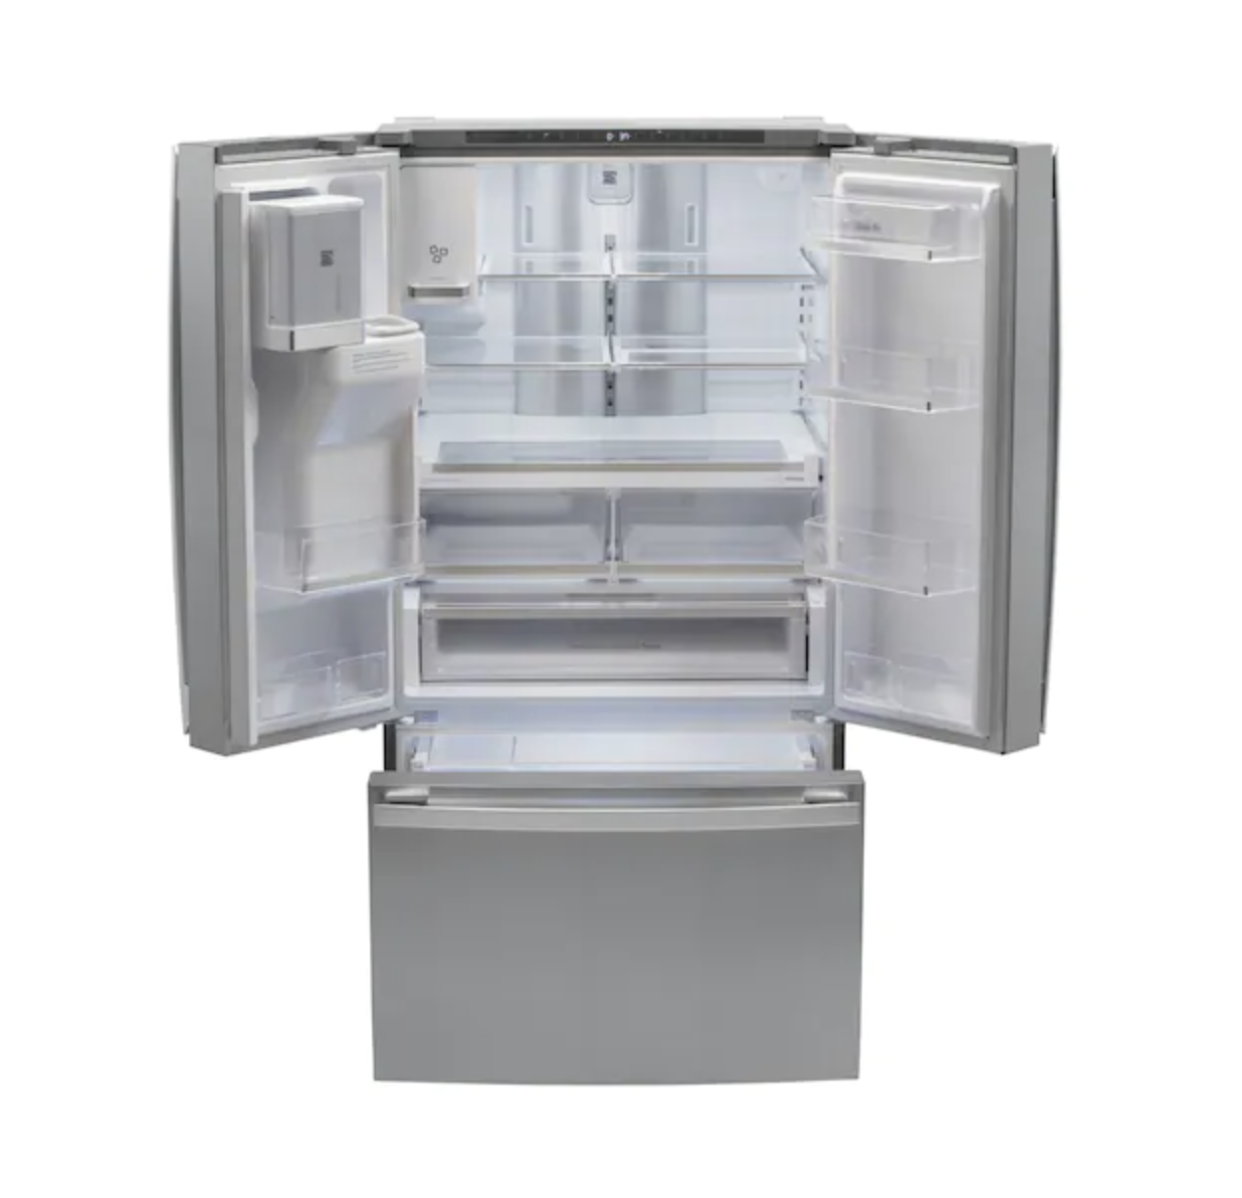 Kenmore Elite French Door Refrigerator with Ice Maker